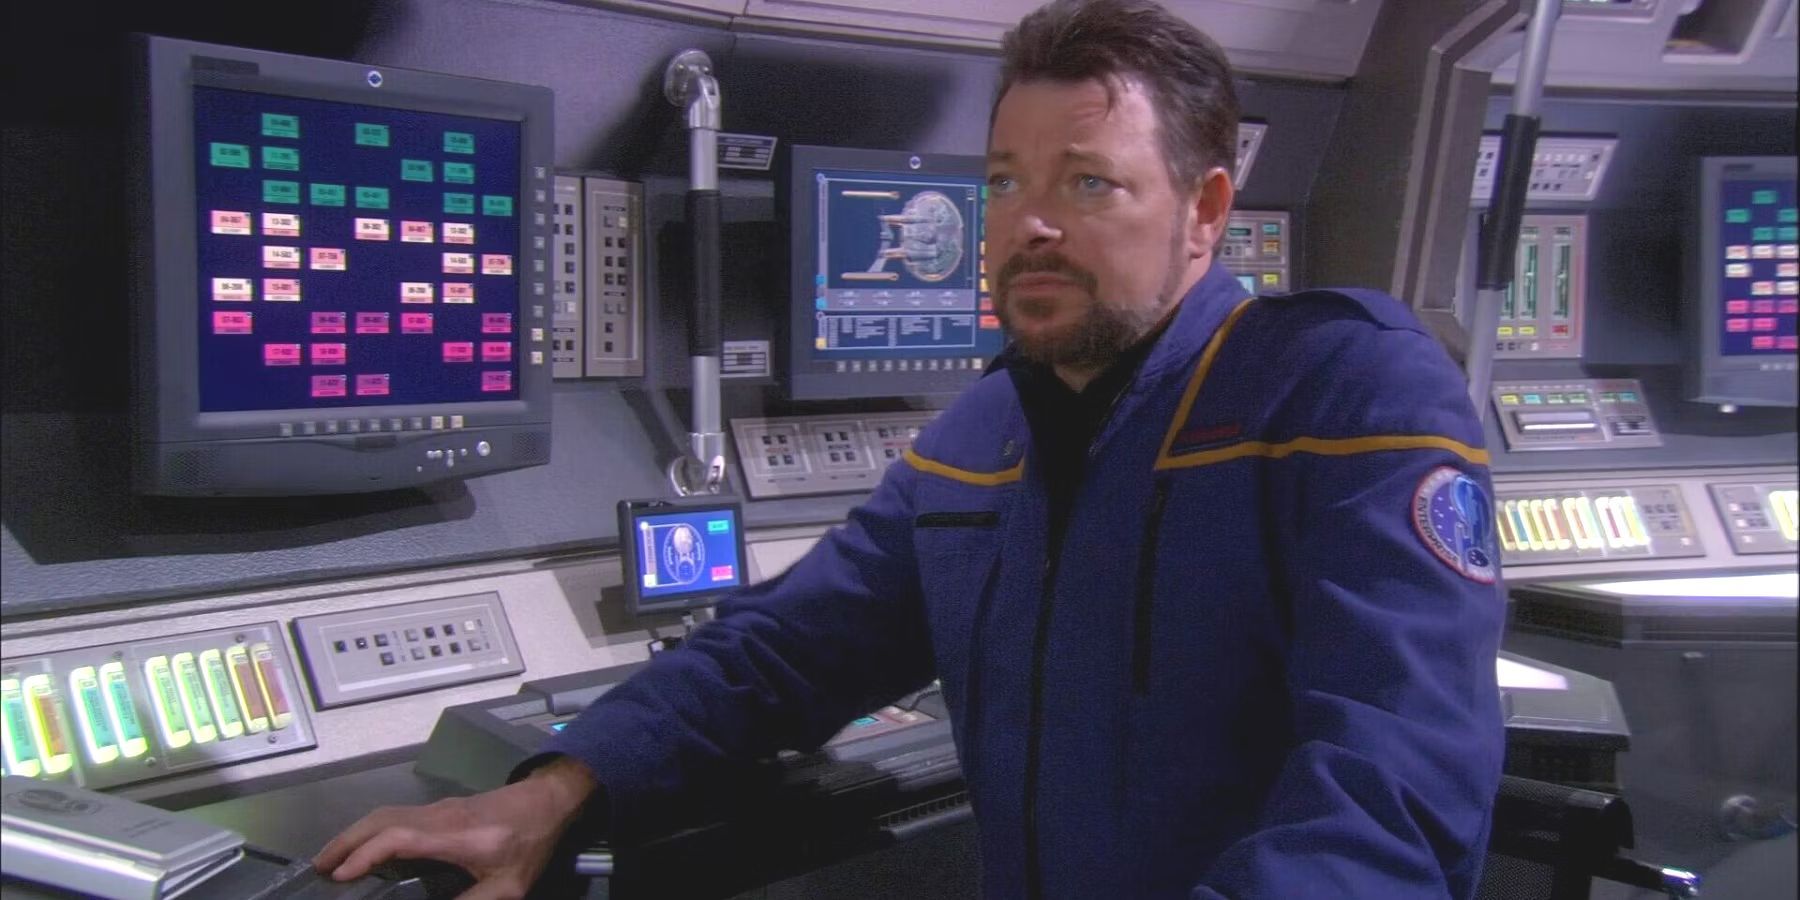 Star Trek: Enterprise shows Will Riker (Jonathan Frakes) at a starship console